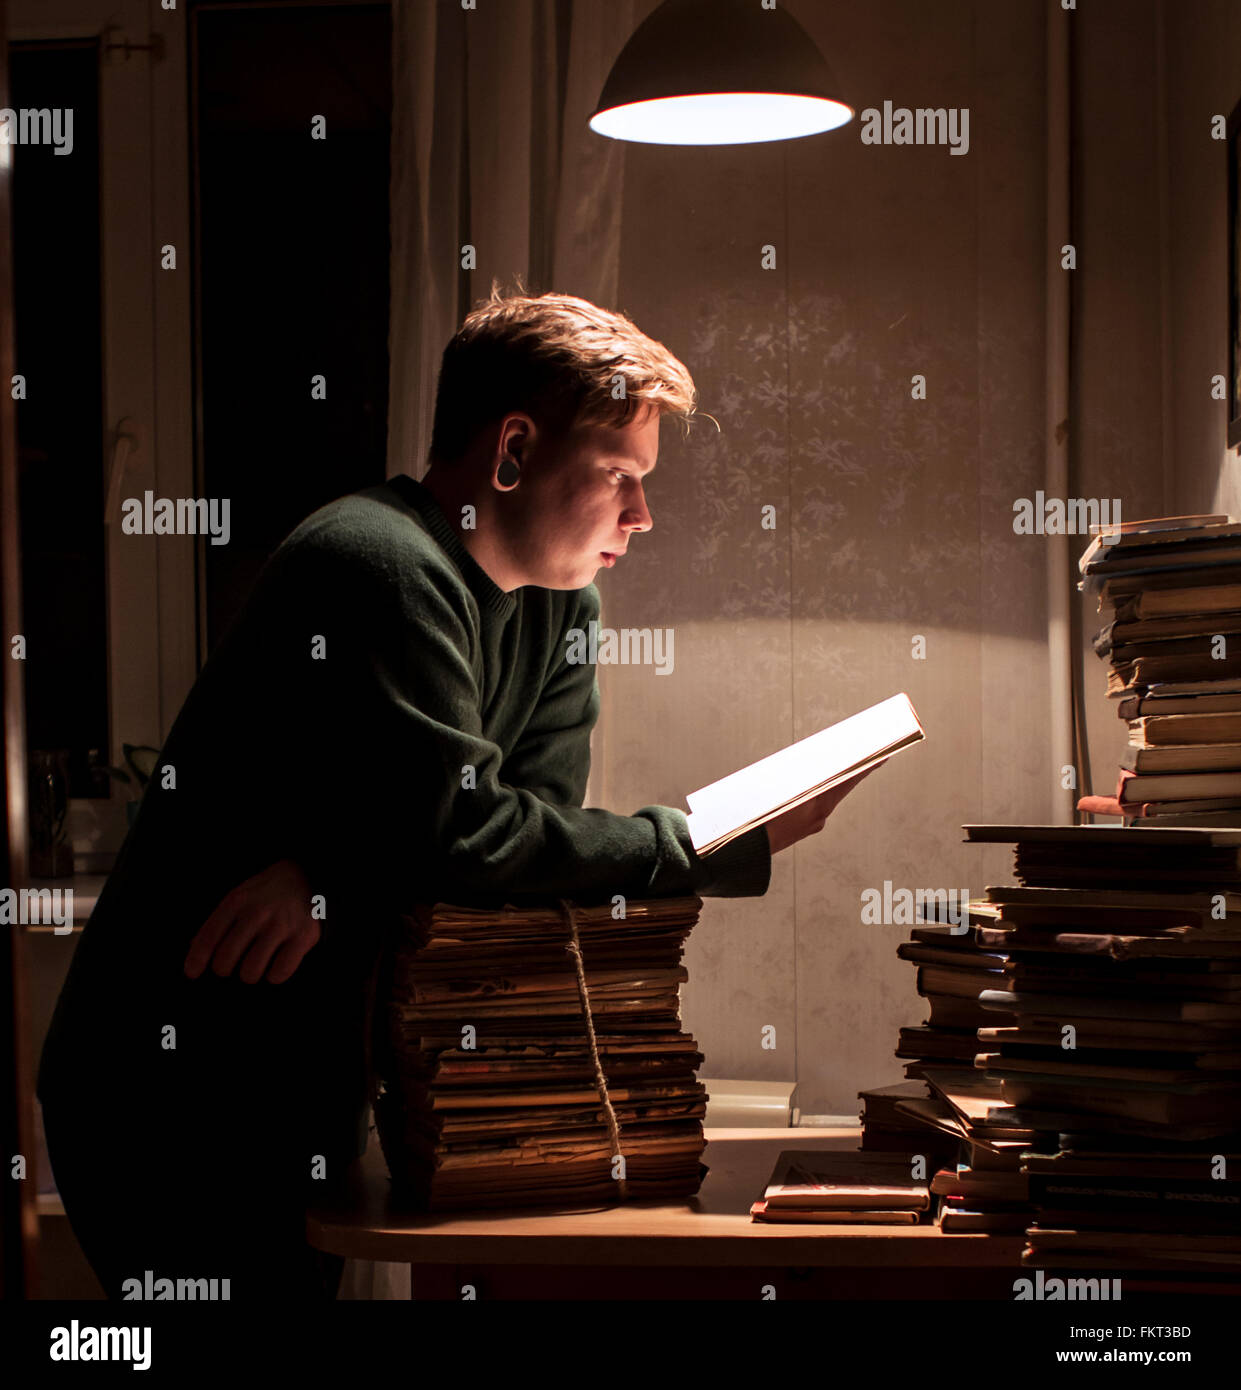 Caucasian man reading stack of books Stock Photo